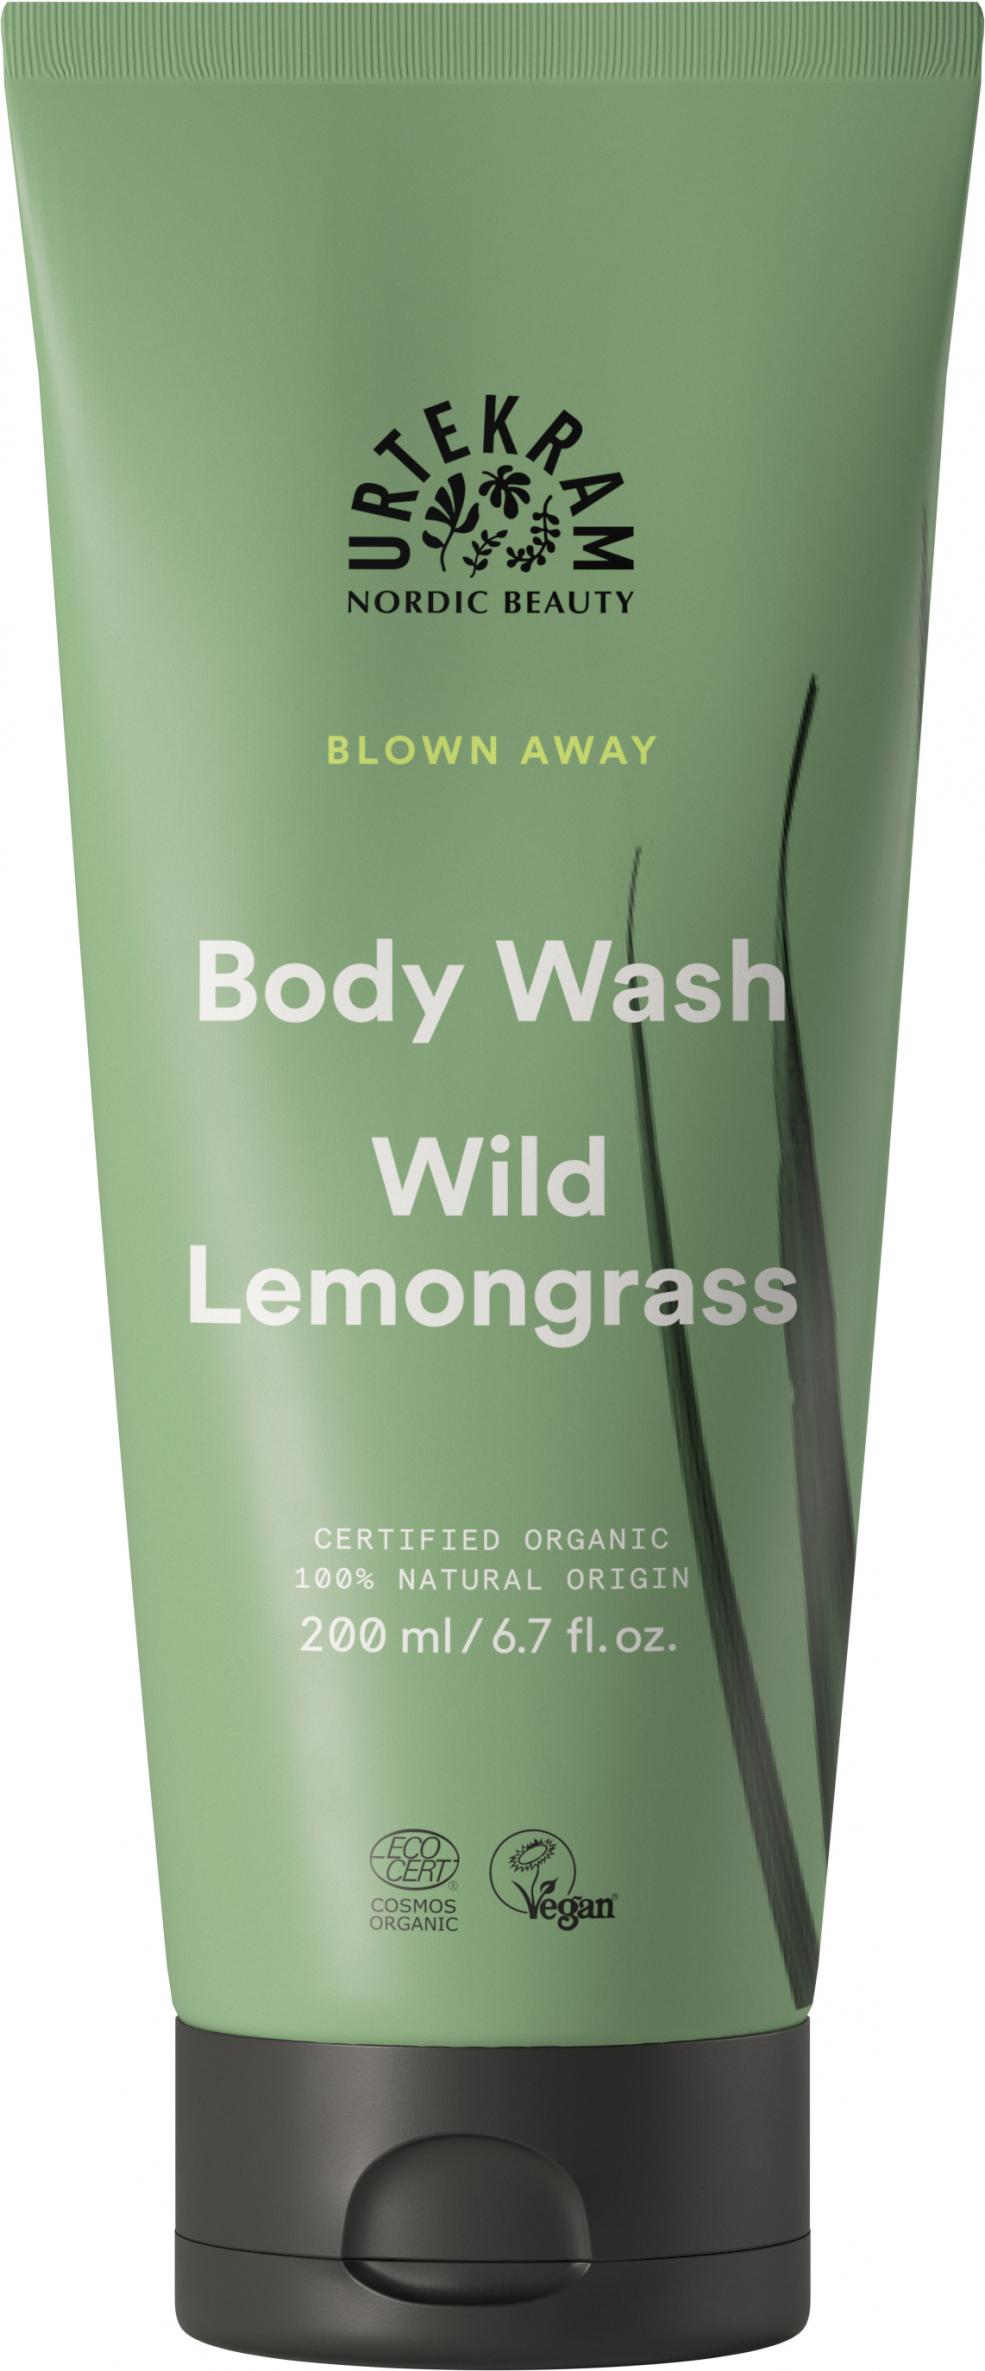 Body Wash Wild Lemongrass 200ml